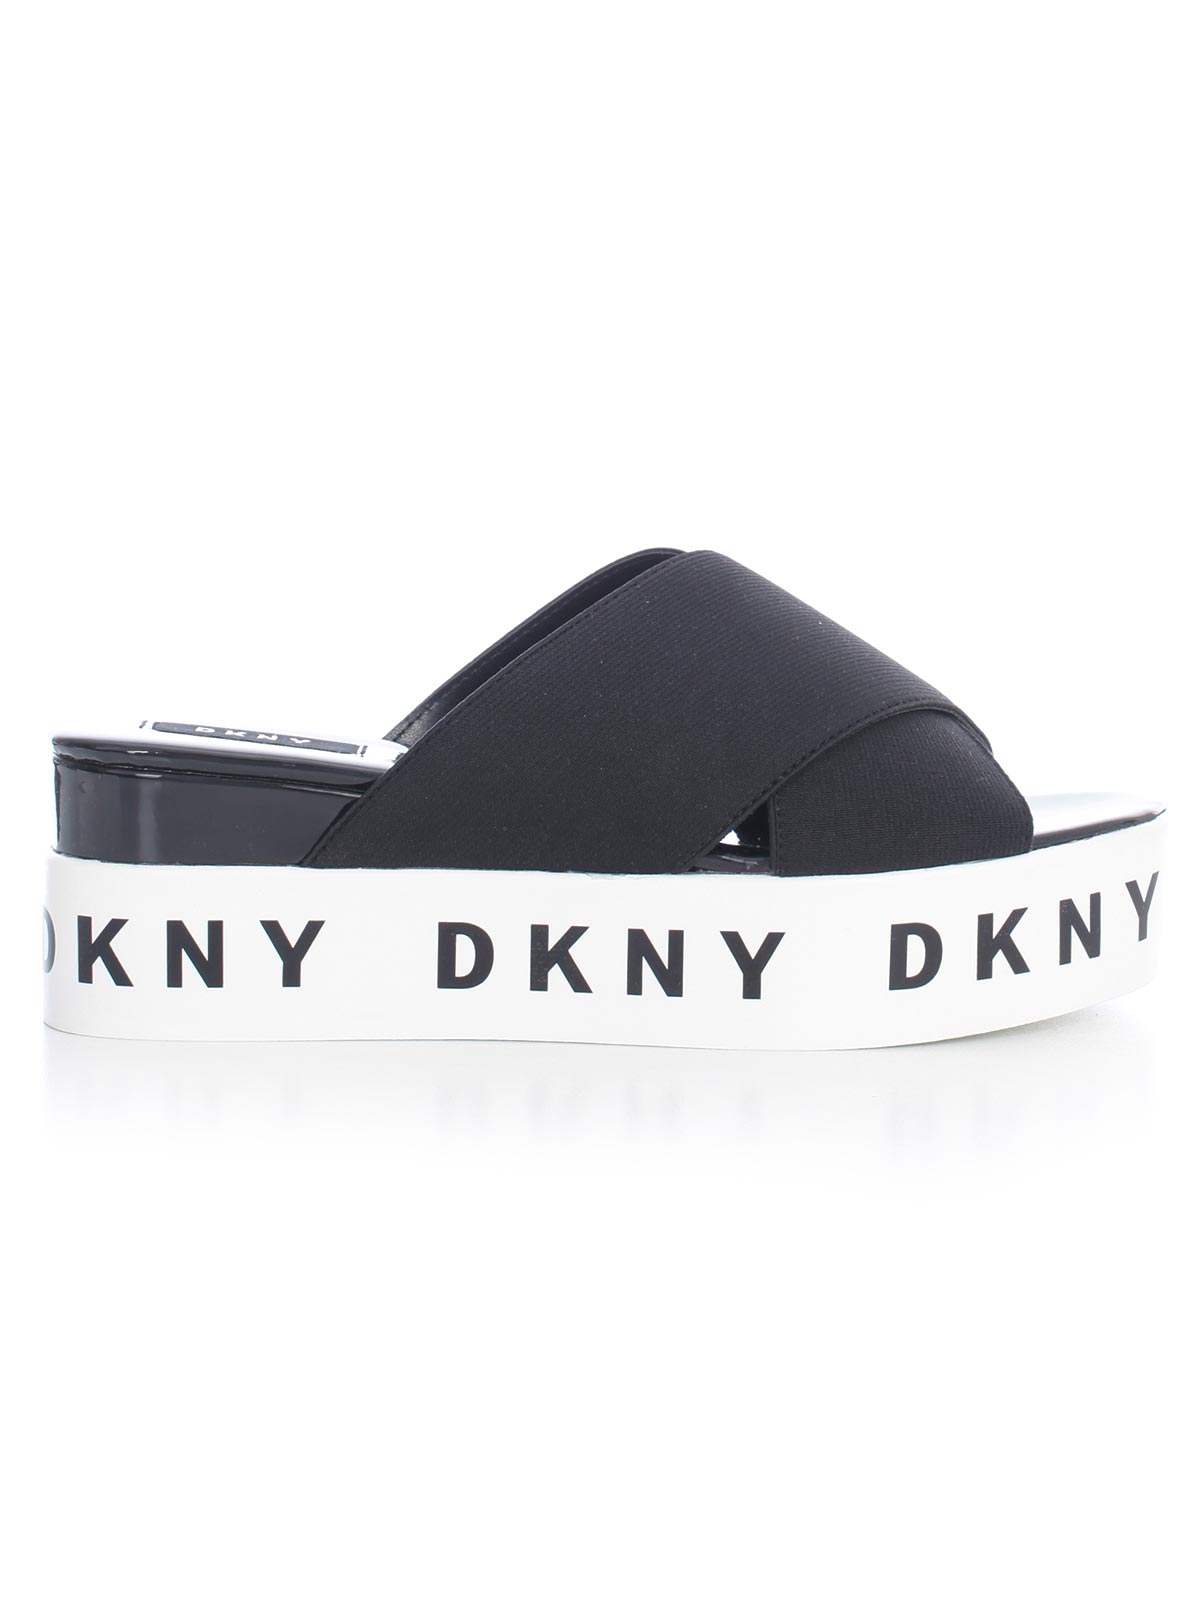 Dkny Shoes K4981154 - 001 BLK BLACK 